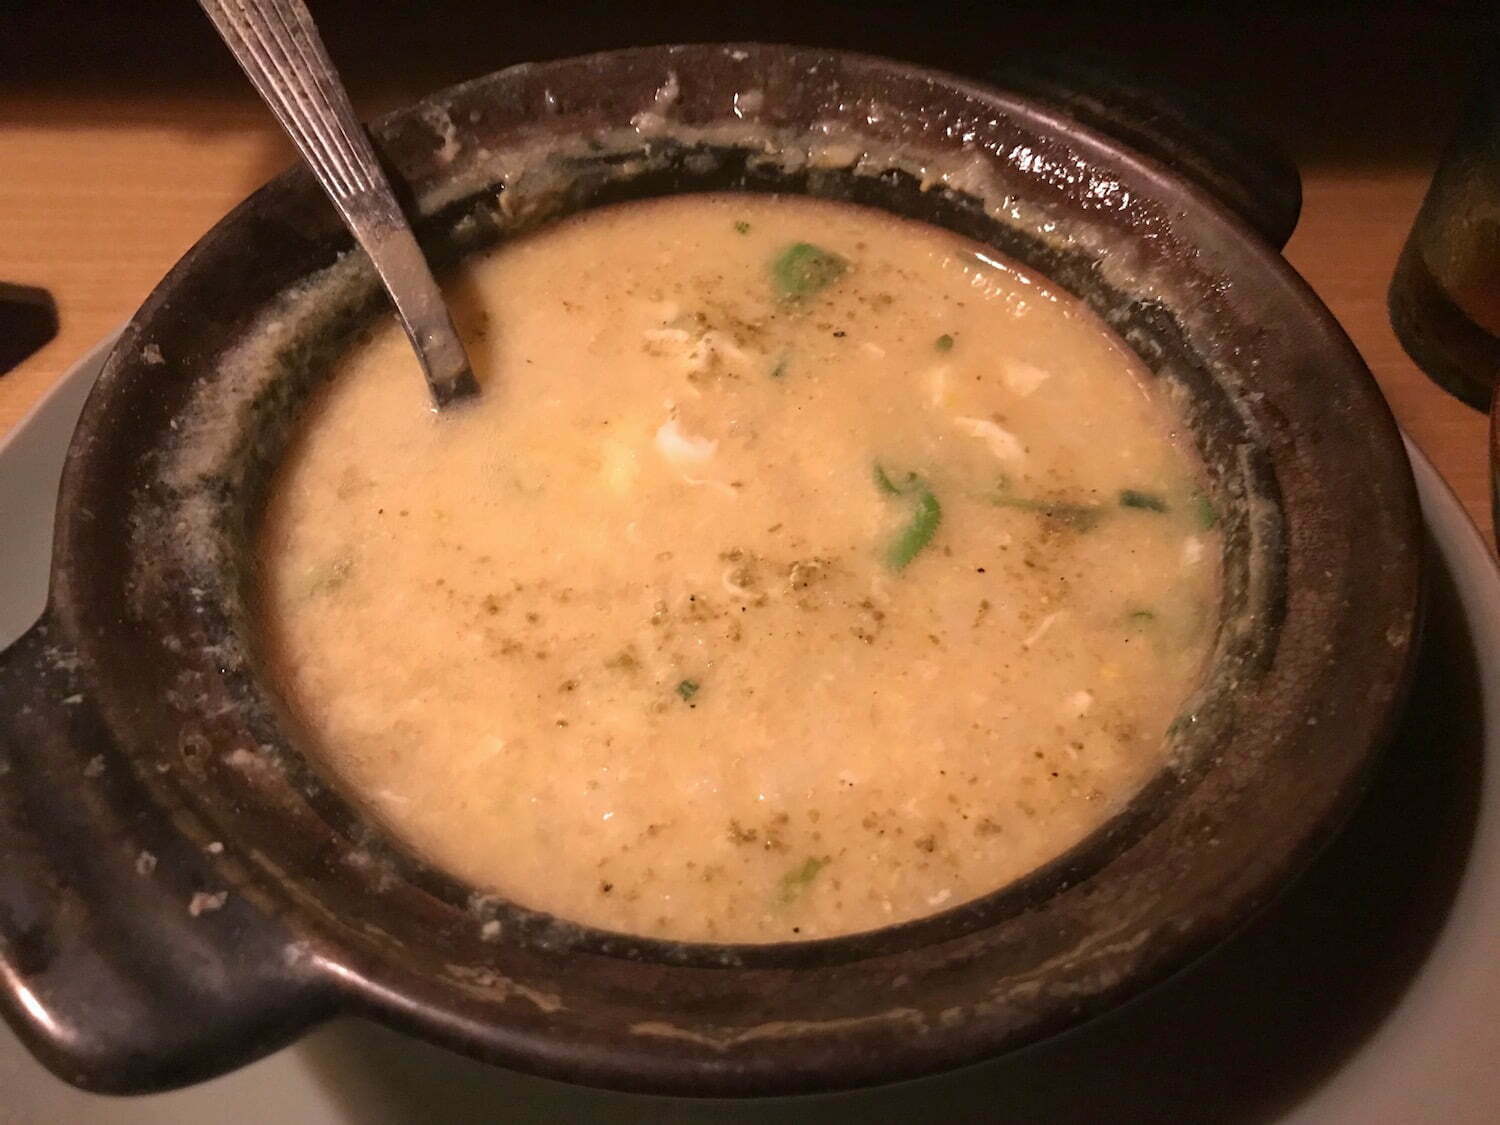 Porridge of rice with seafood flavor